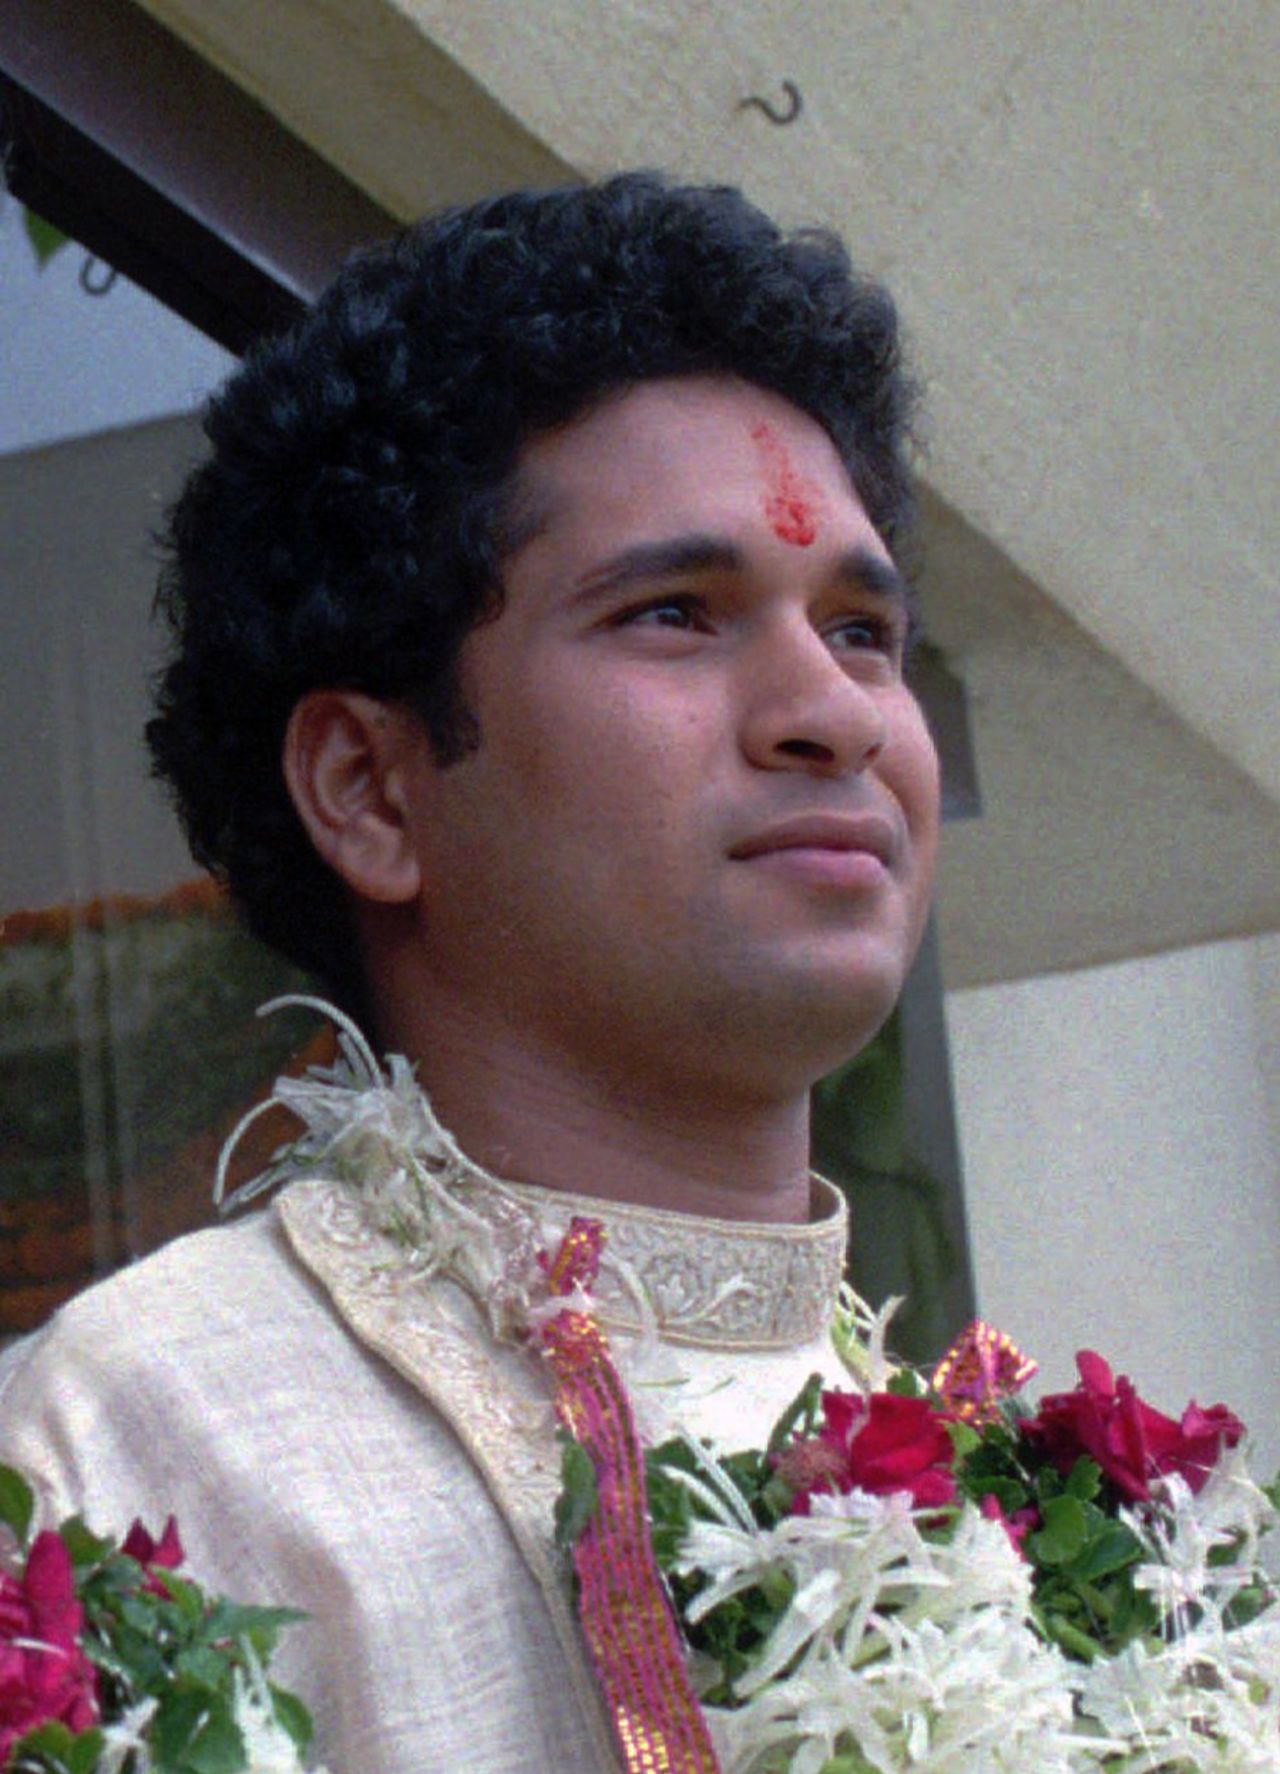 Sachin Tendulkar after his wedding, India, May 1, 1995